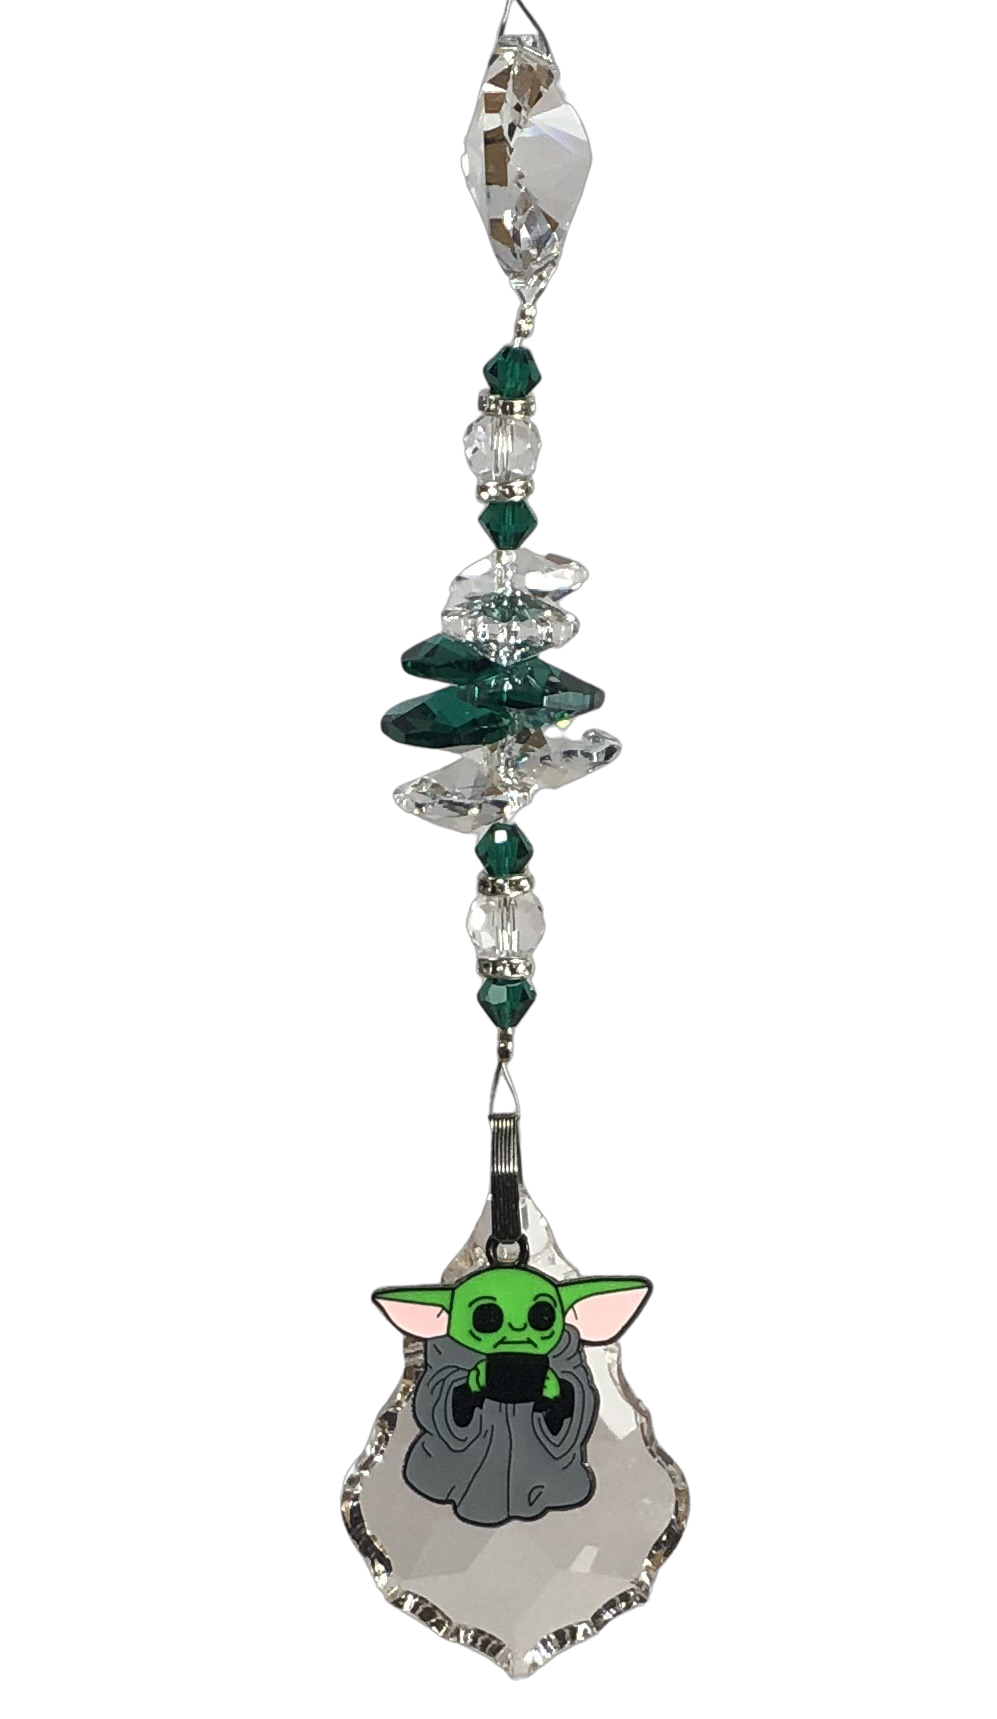 Star Wars baby Yoda - Grogu crystal suncatcher, decorated with 50mm Starburst crystal and malachite gemstone.